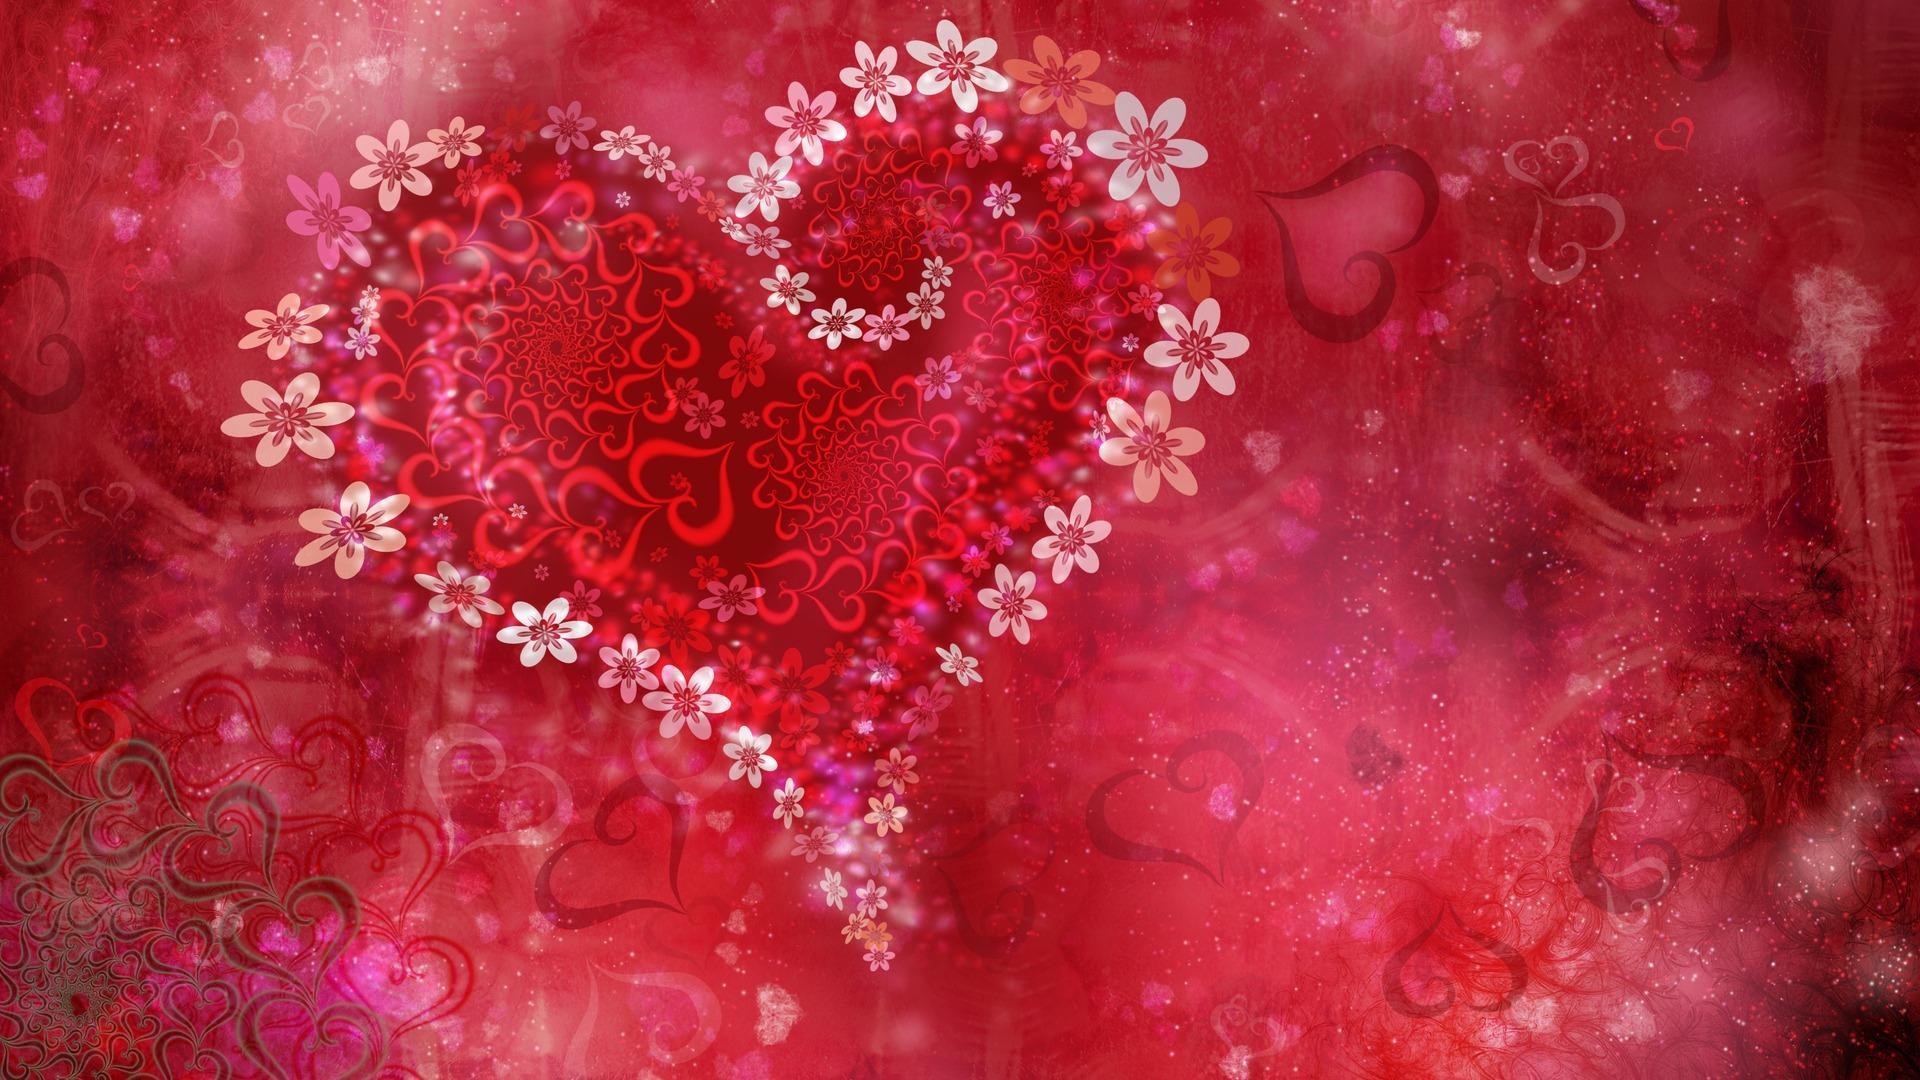 Pink Love Heart Full HD Wallpaper